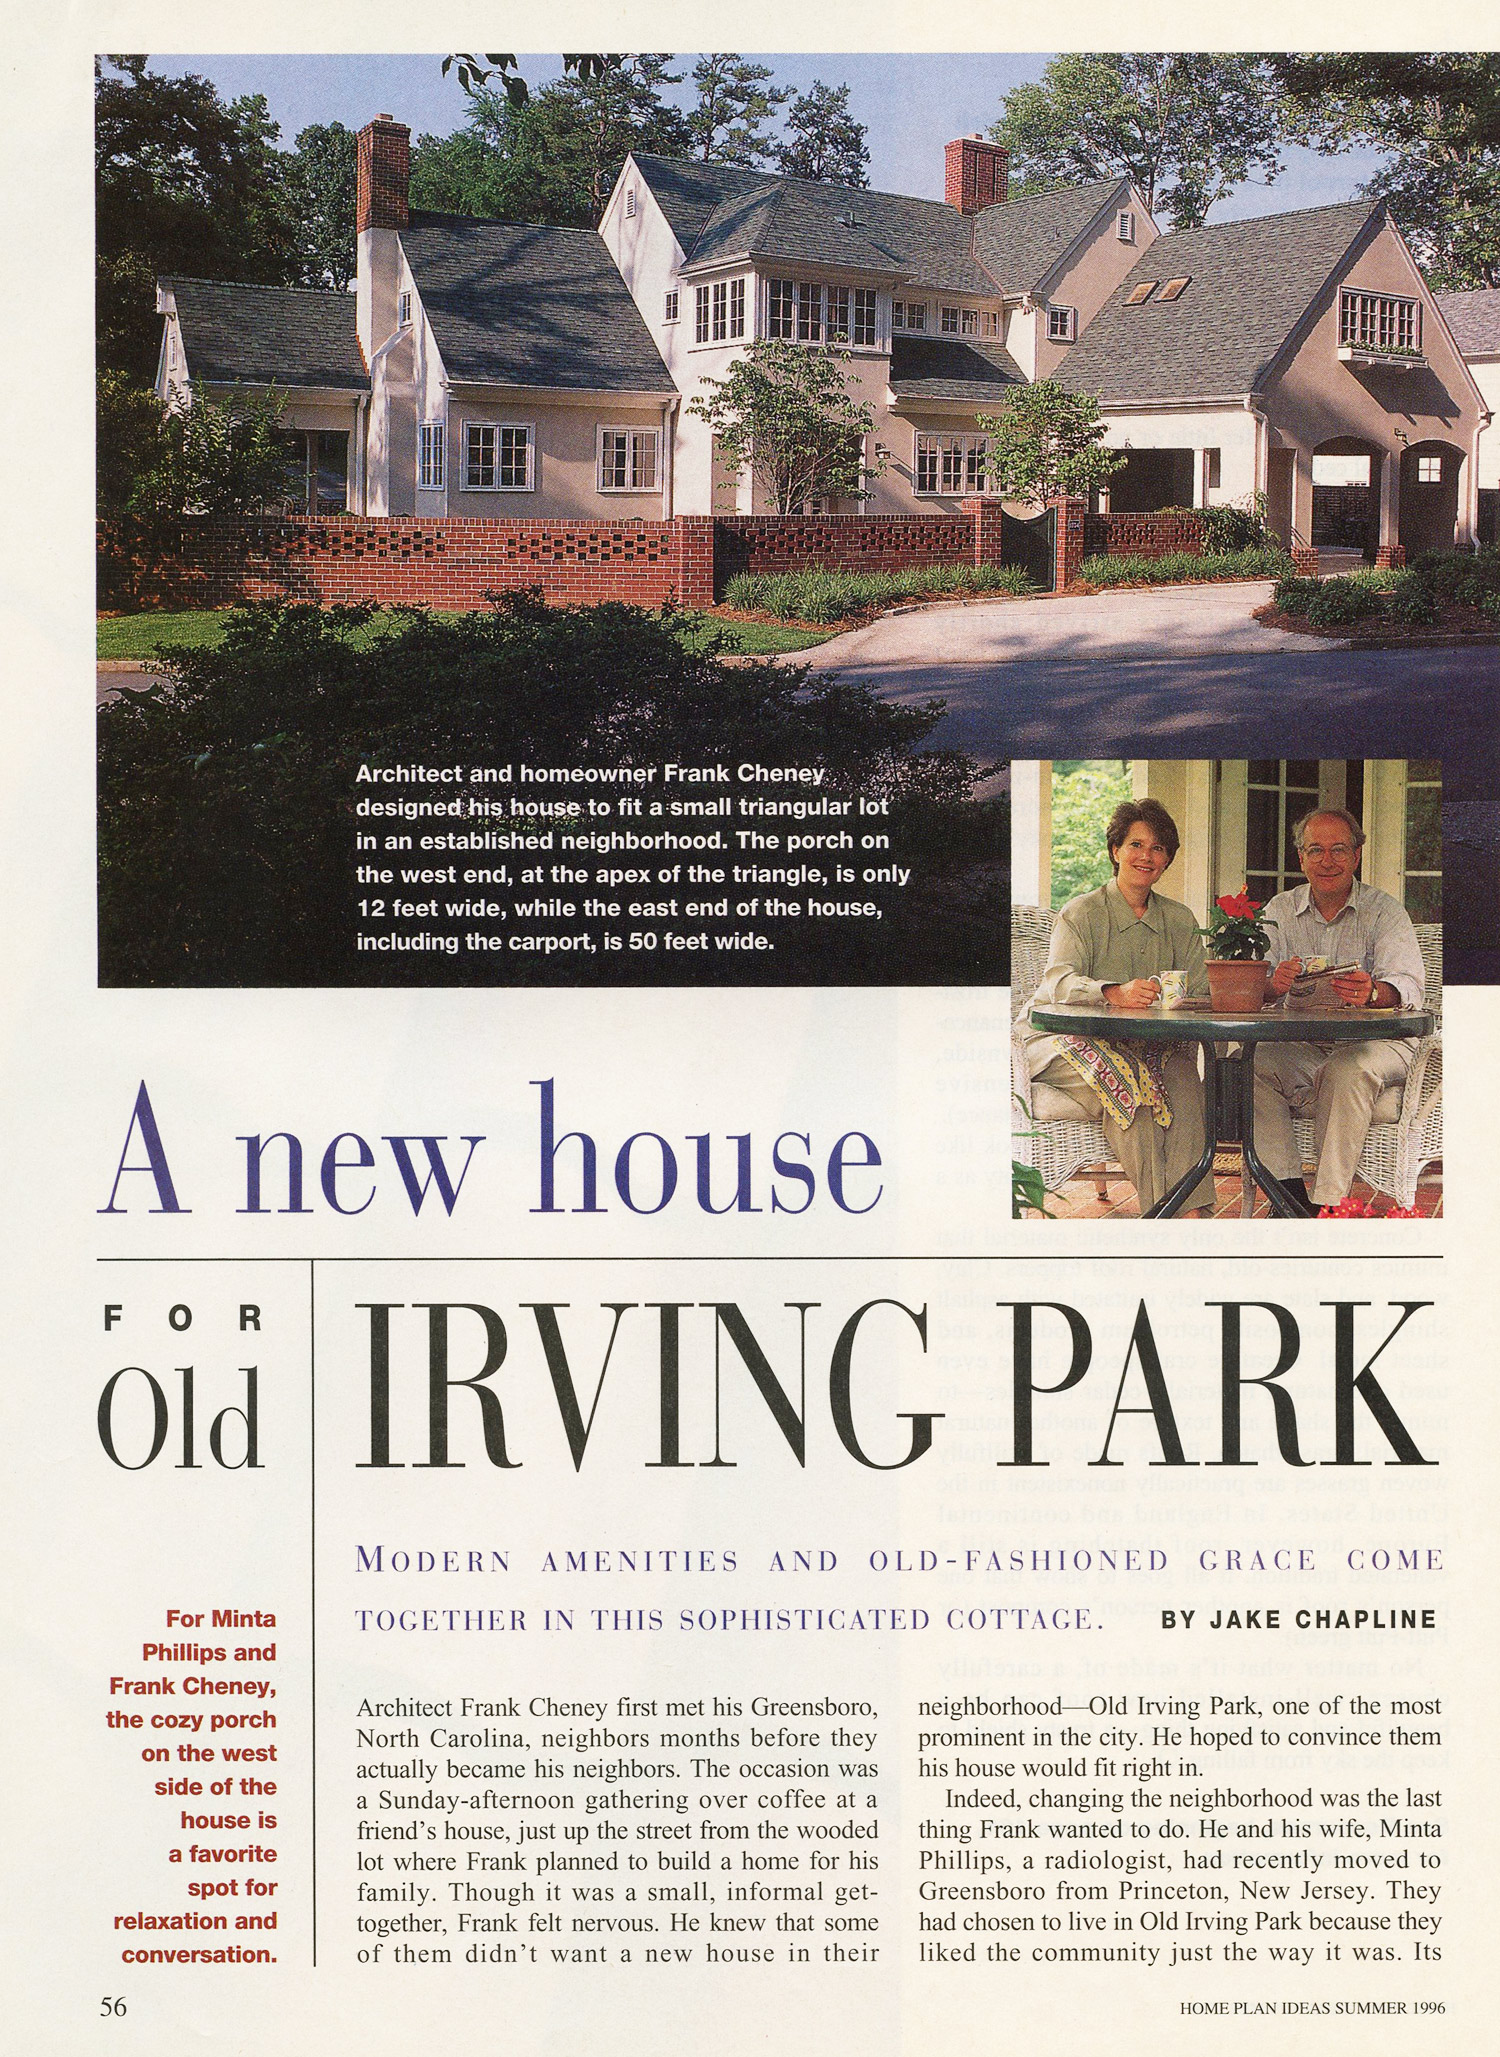 home-plan-ideas-summer-1996-frank-cheney-architect-1.jpg